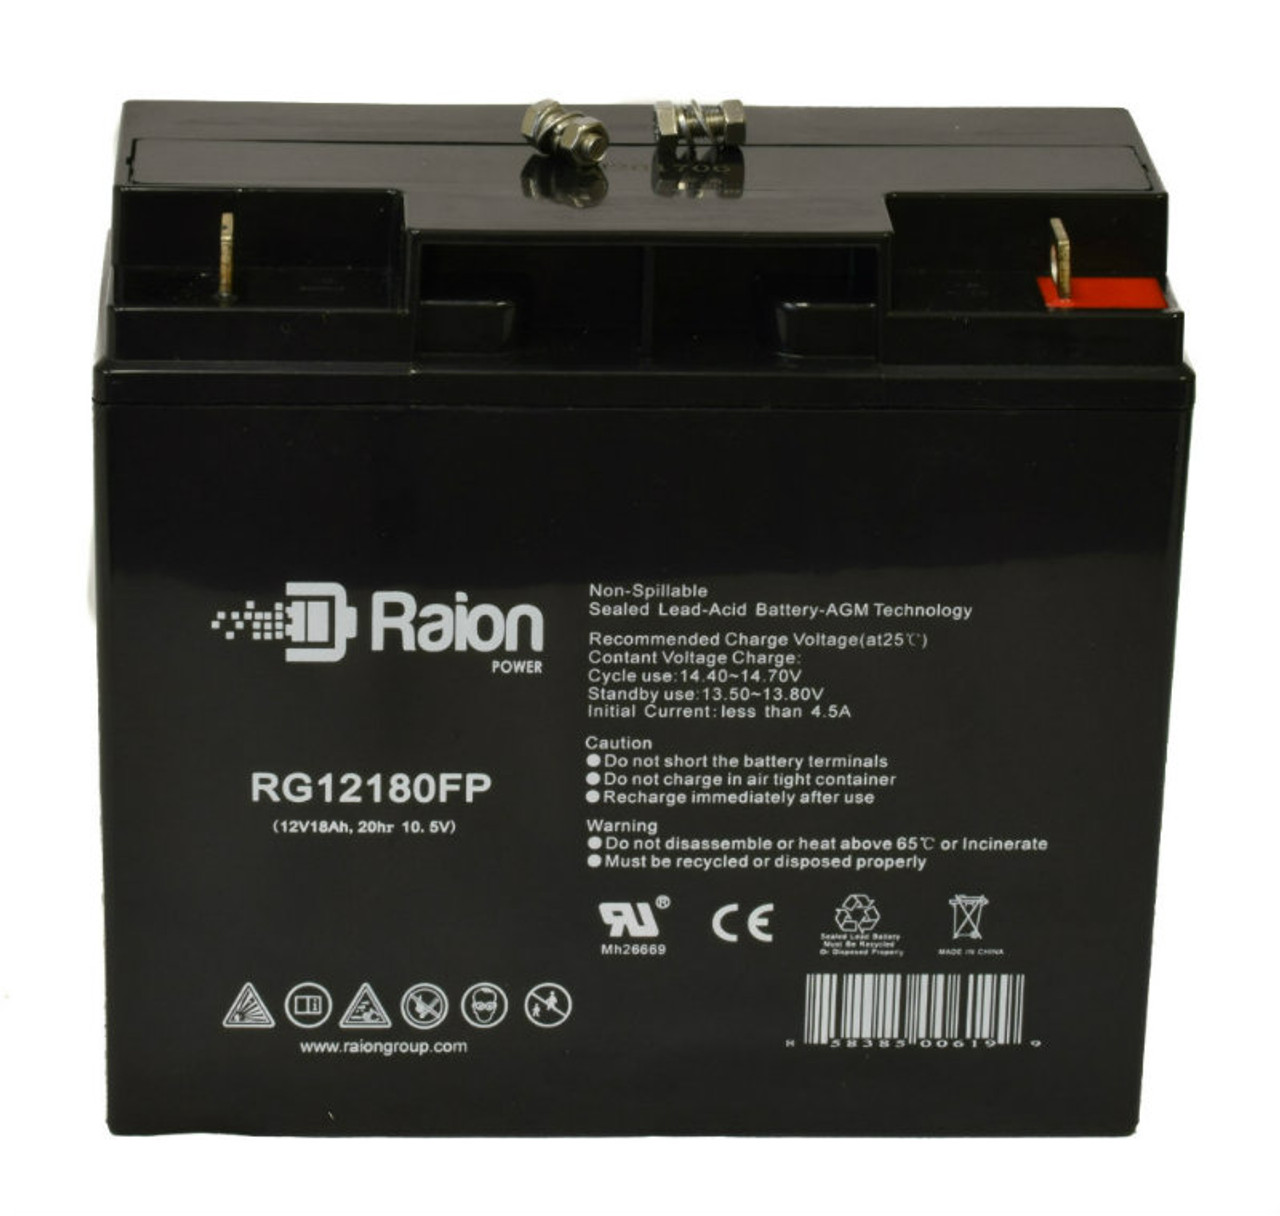 Raion Power RG12180FP 12V 18Ah Lead Acid Battery for Fun E-Cycle E-Scooter X-Men